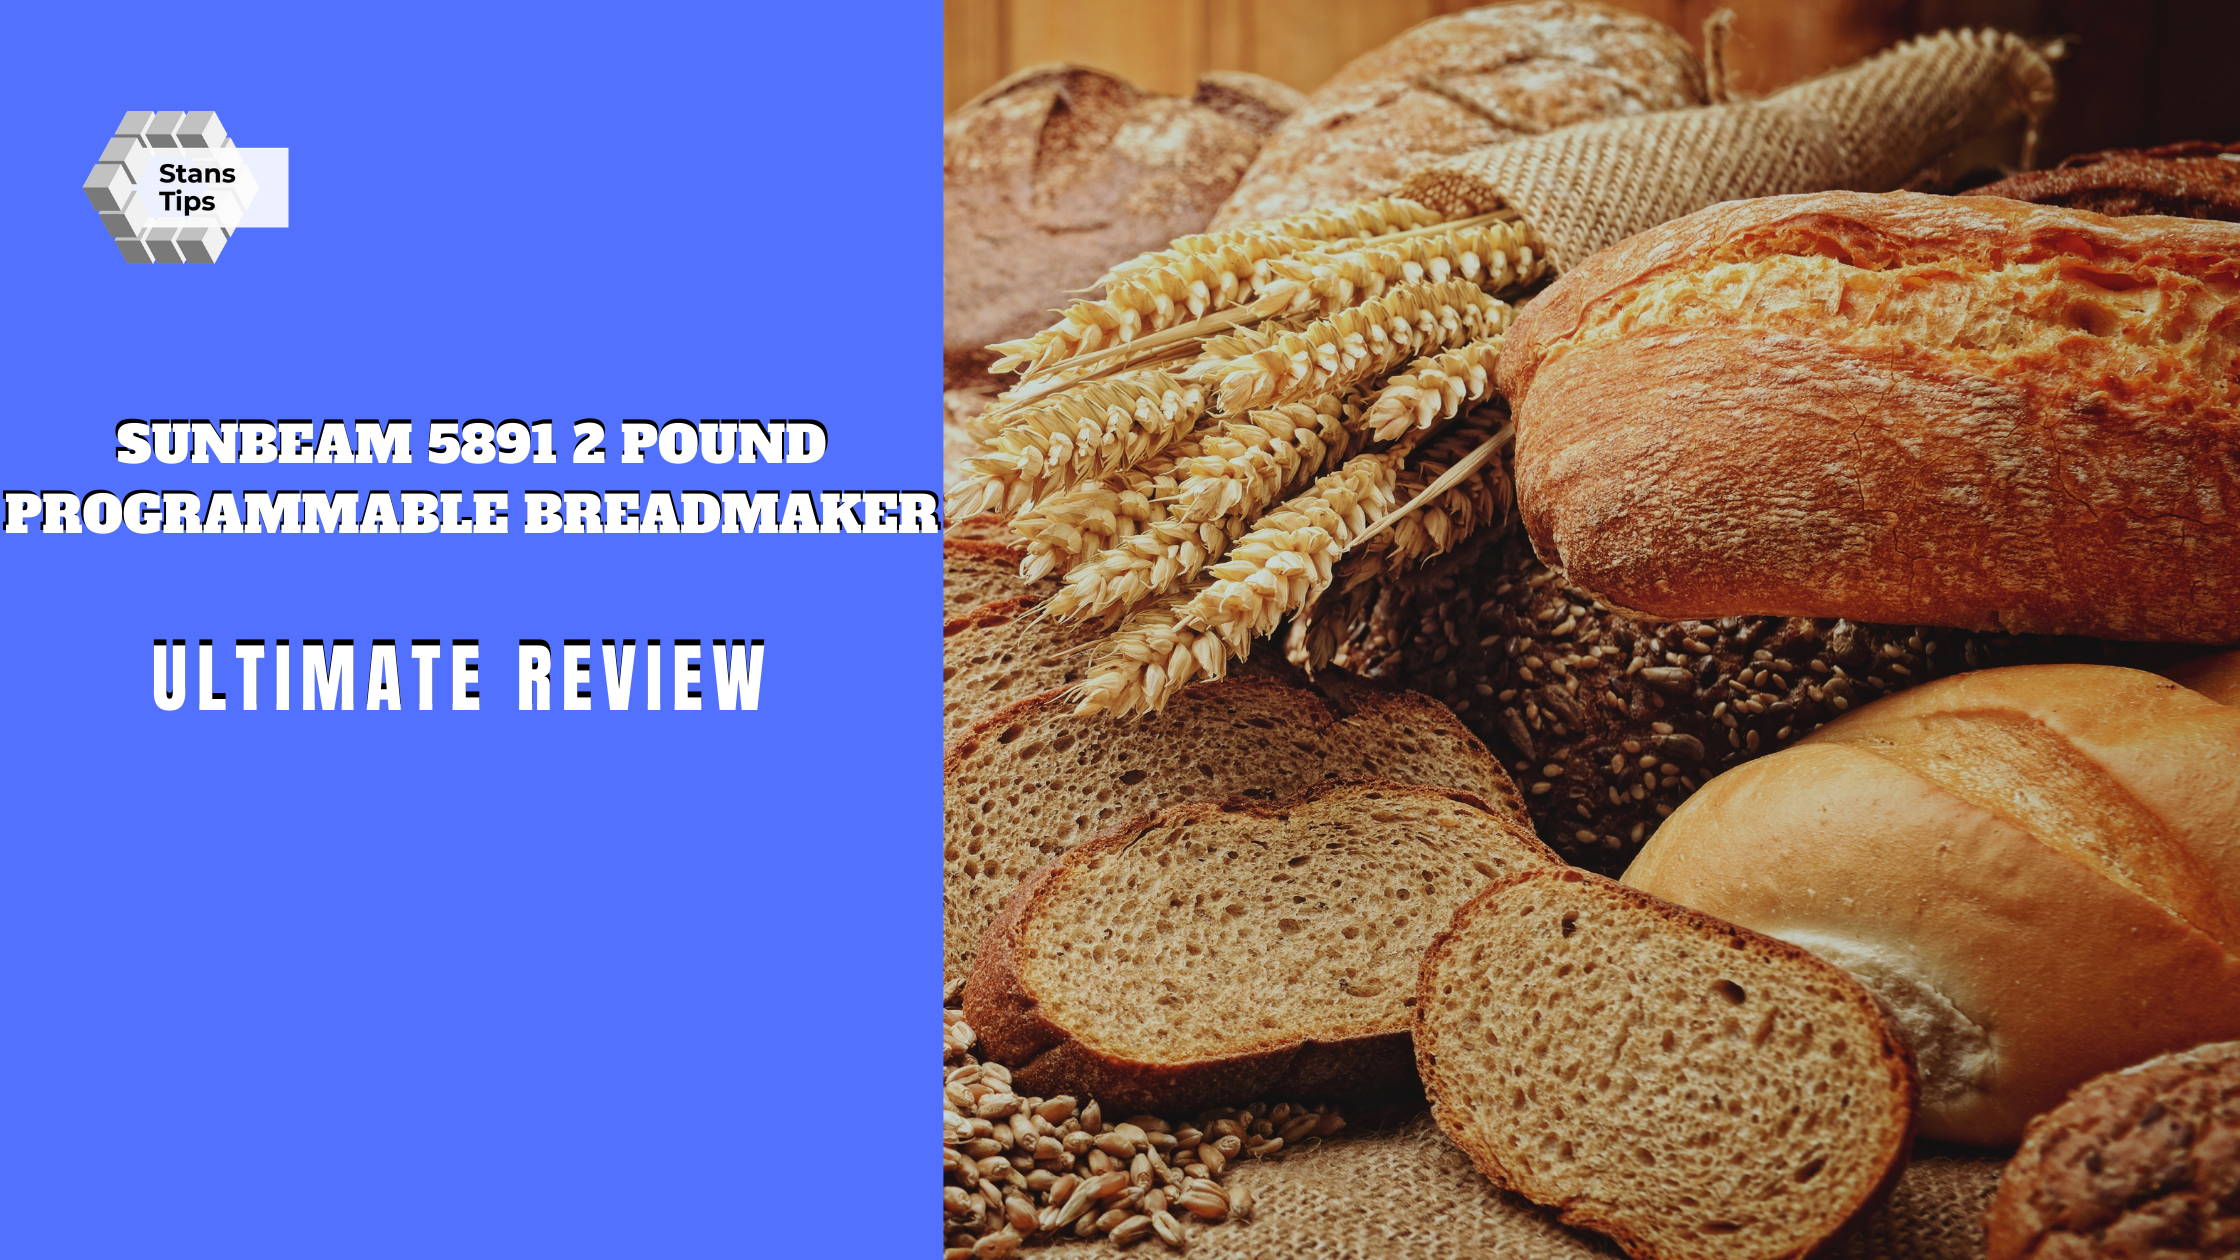 Sunbeam 5891 2 pound programmable breadmaker review